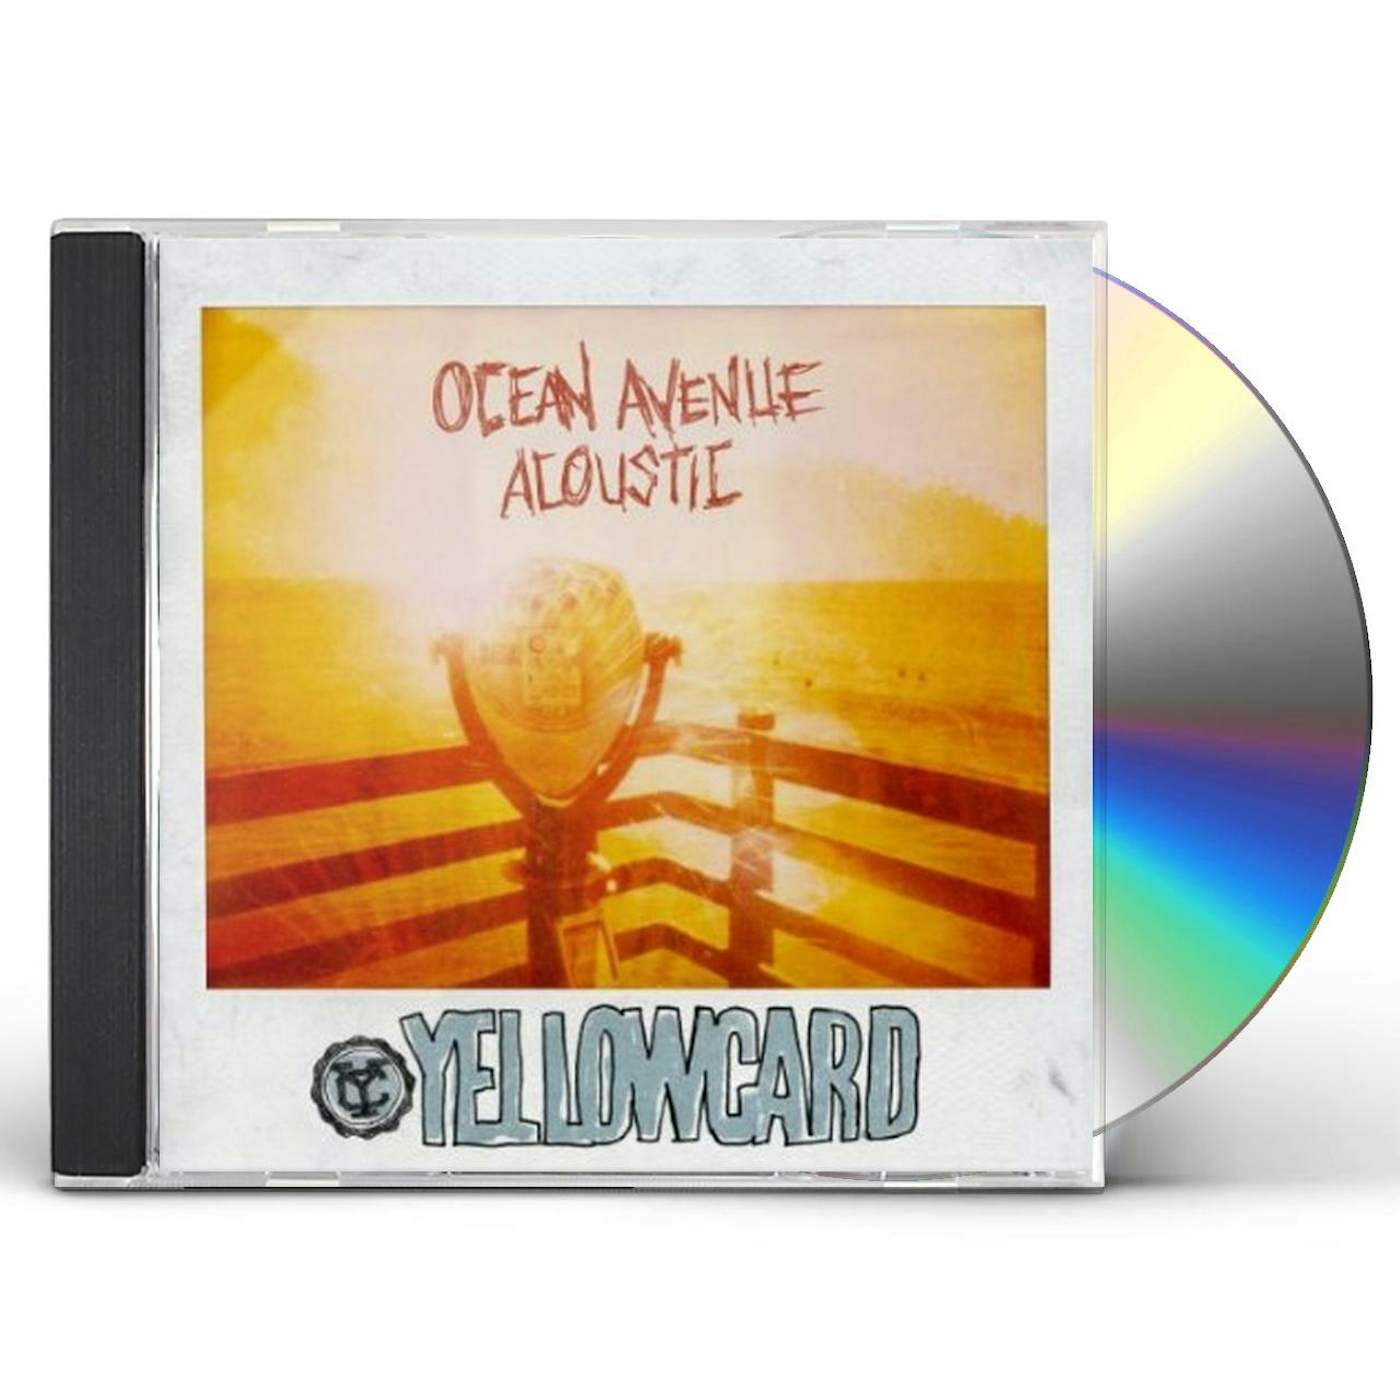 Yellowcard OCEAN AVENUE ACOUSTIC CD